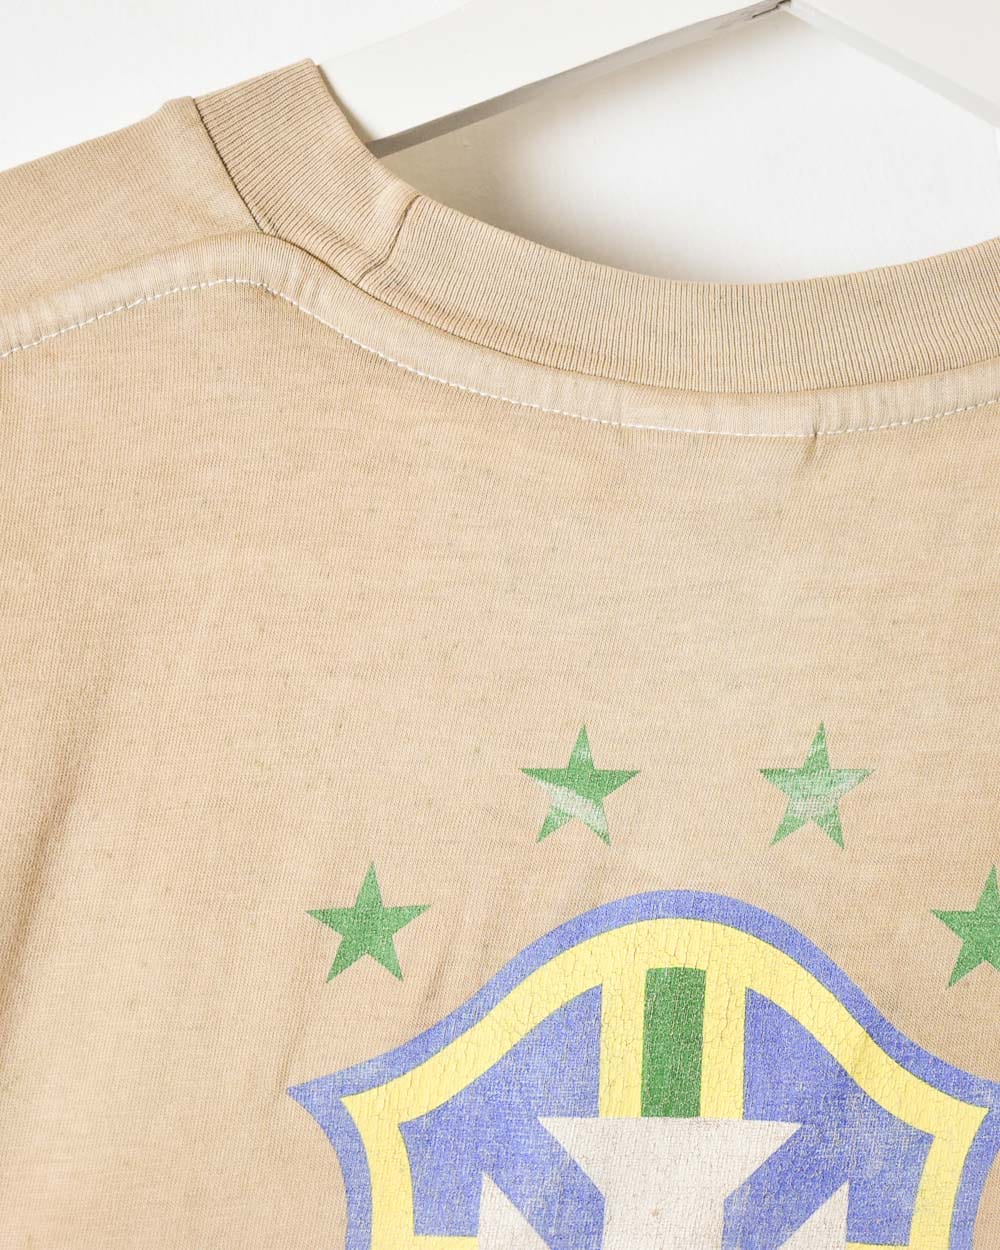 Brown Nike Brazil T-Shirt - Small